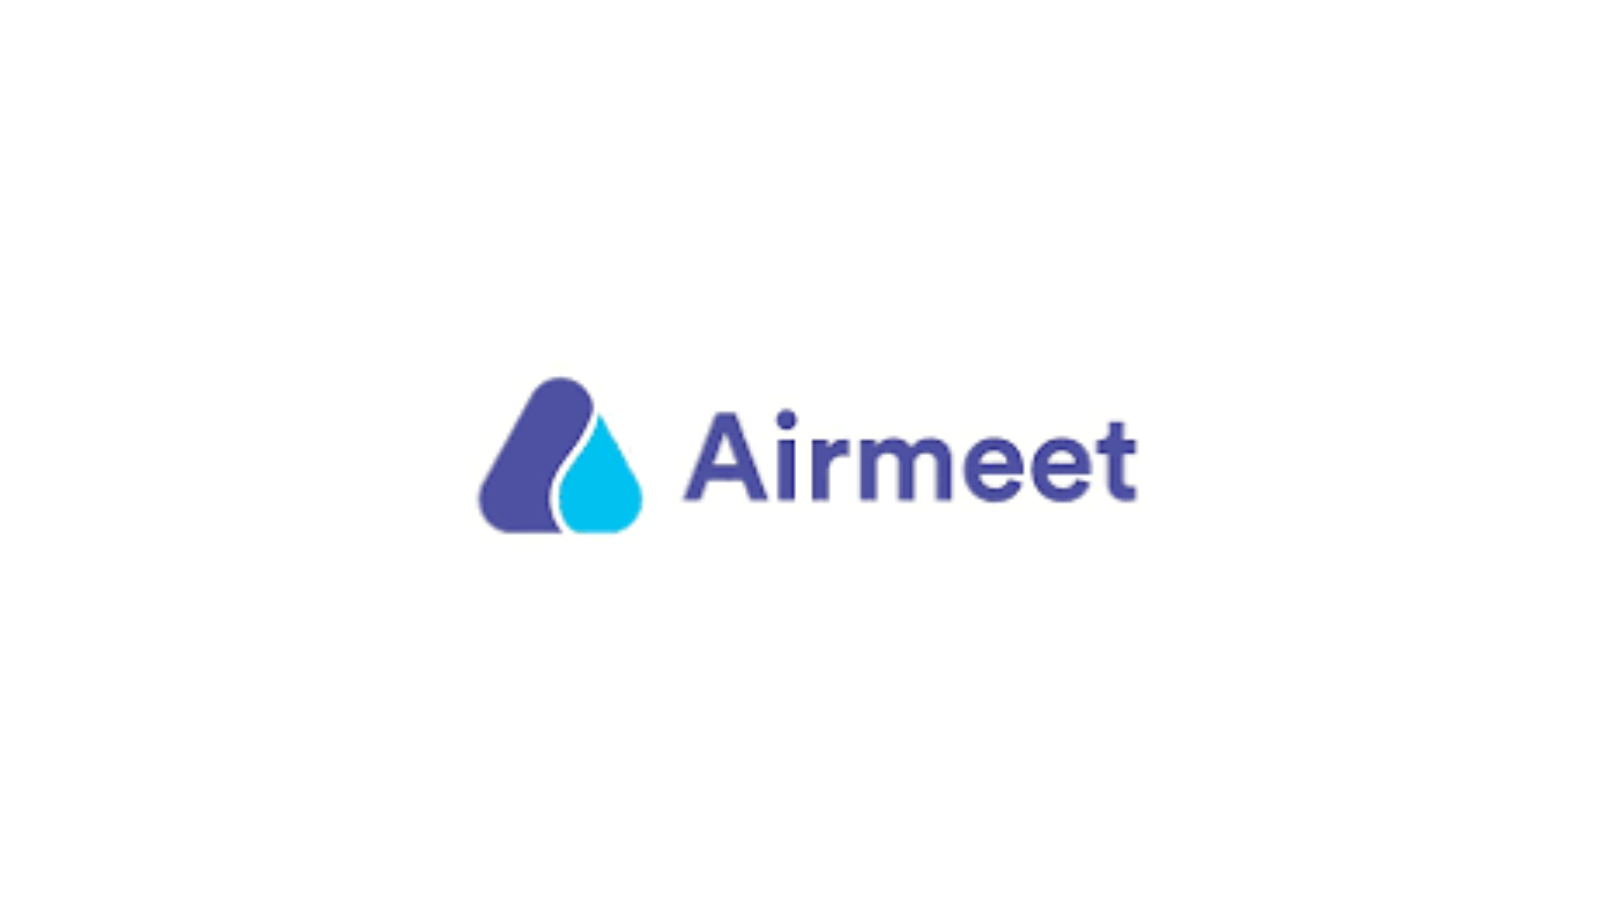 Airmeet’s Virtual Events Platform